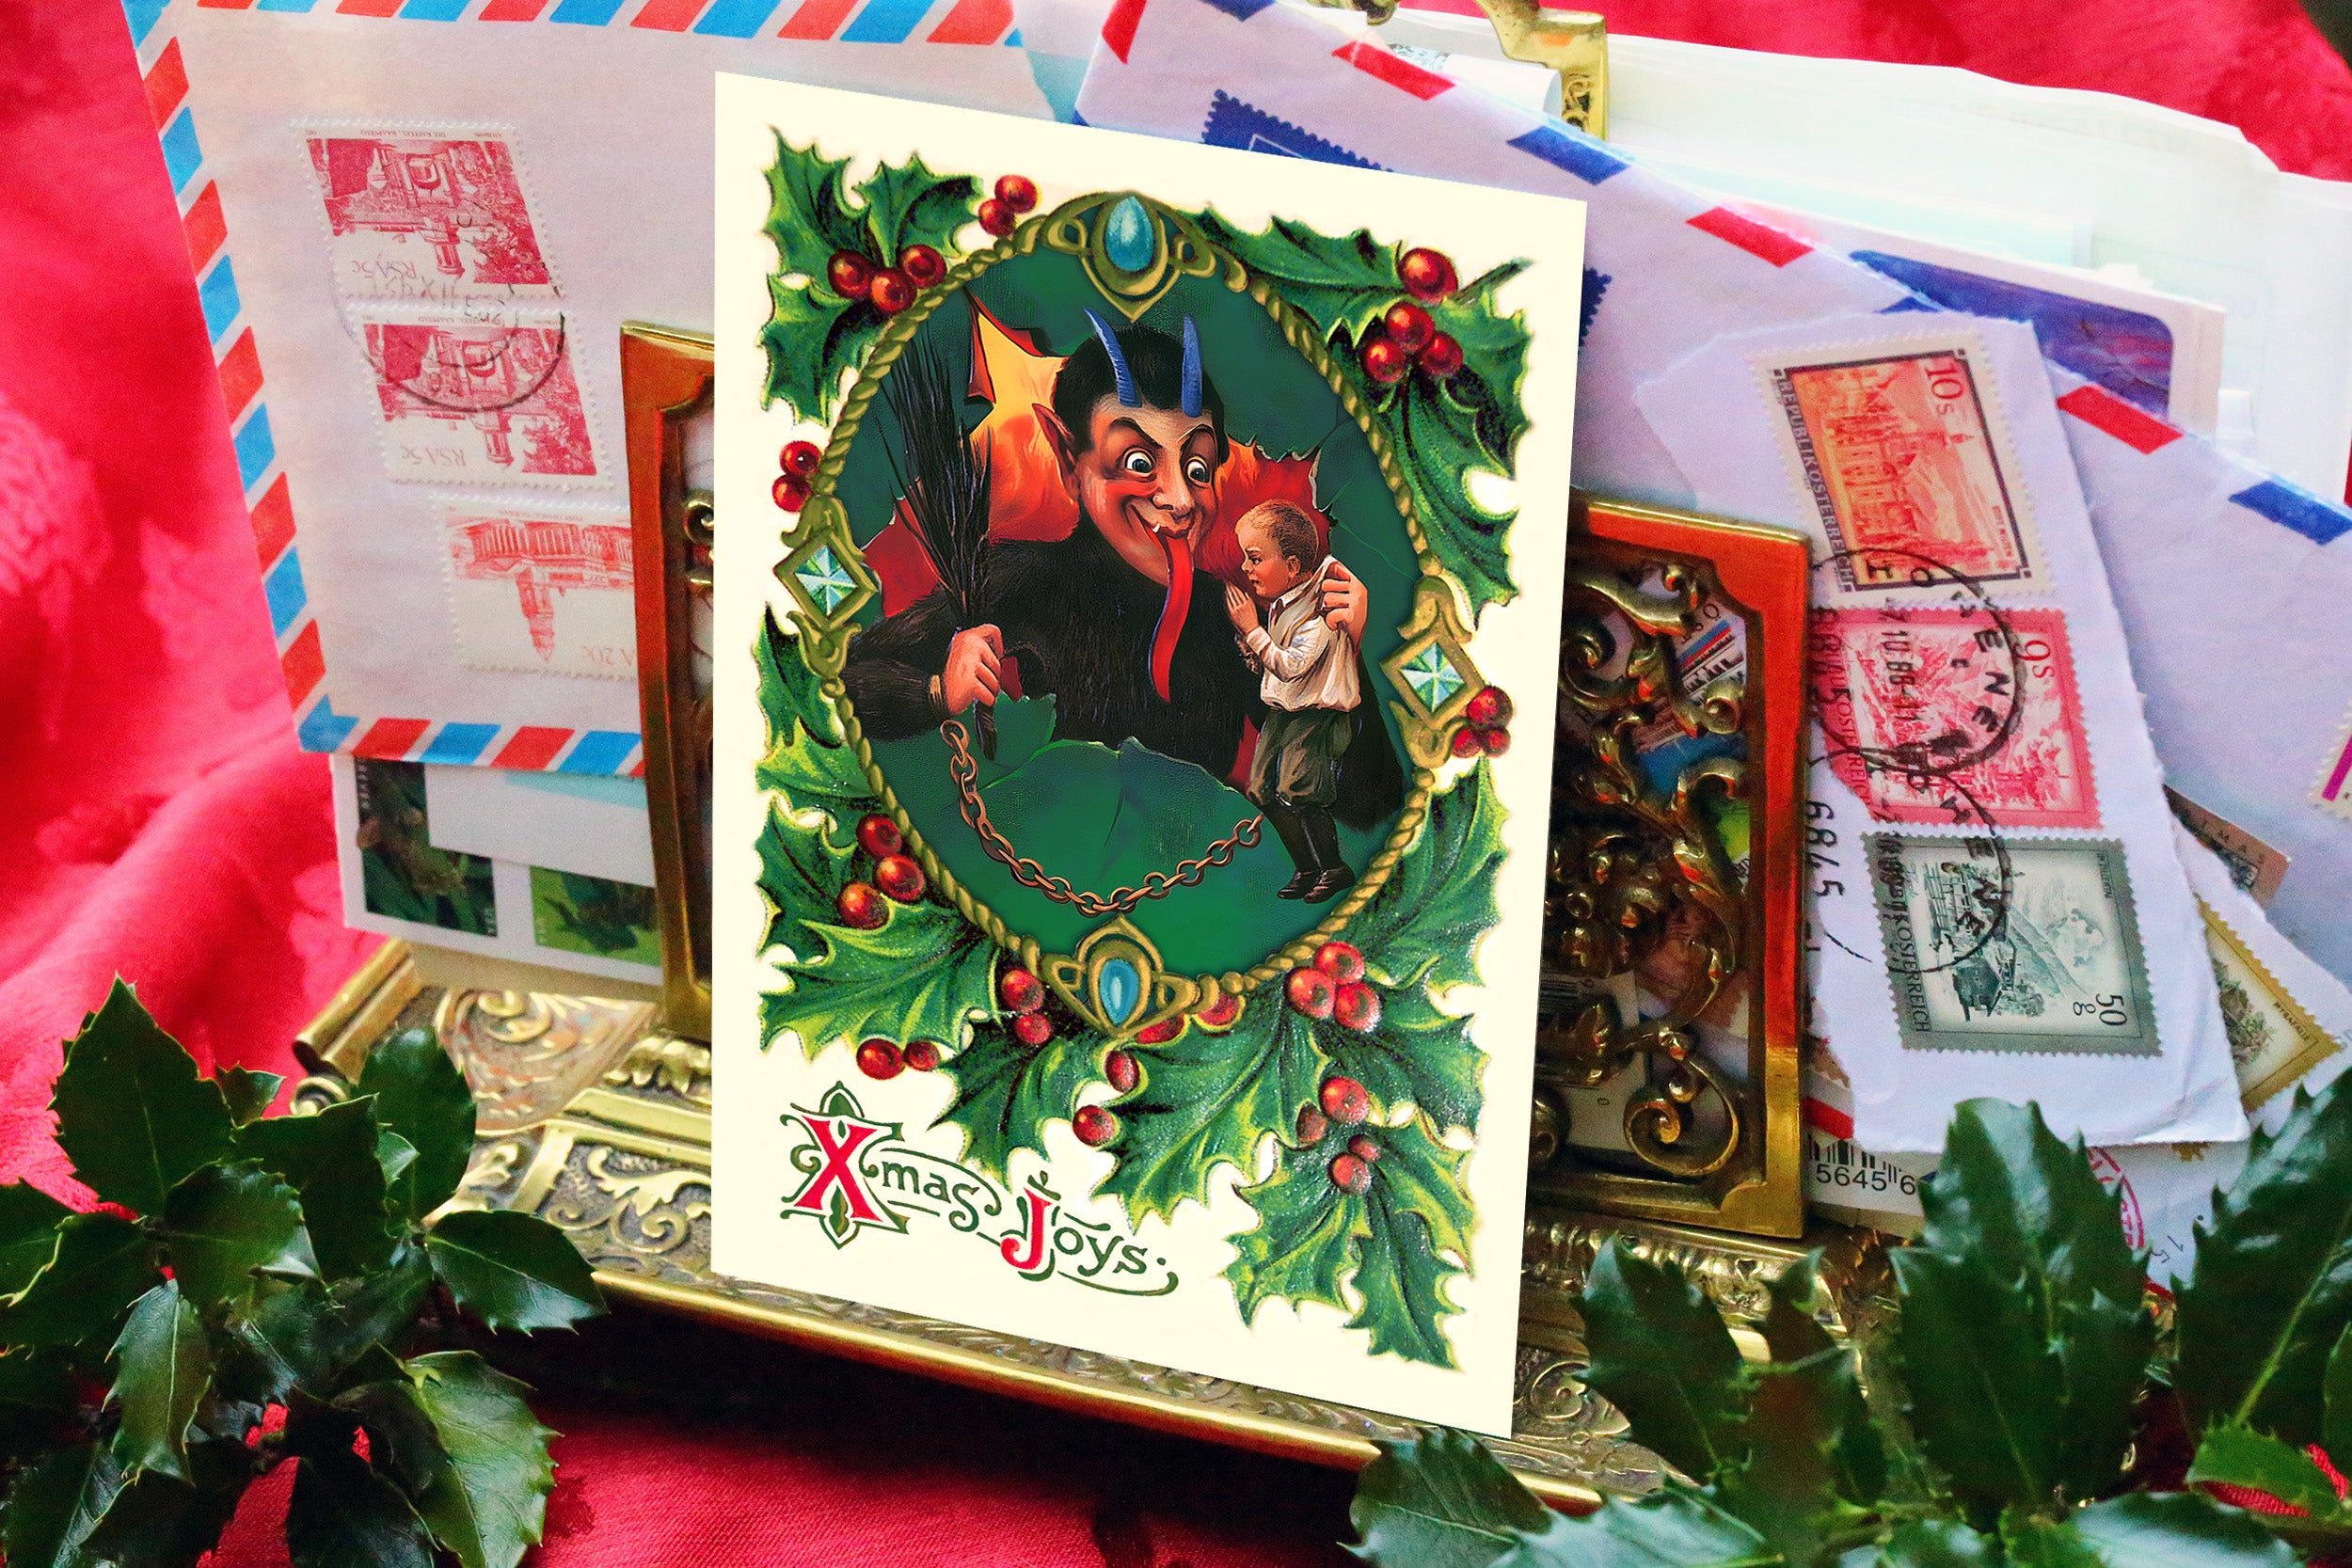 Xmas Joys Krampus, Gruss Vom Krampus Victorian-Inspired Christmas Postcard Set, Set of 12